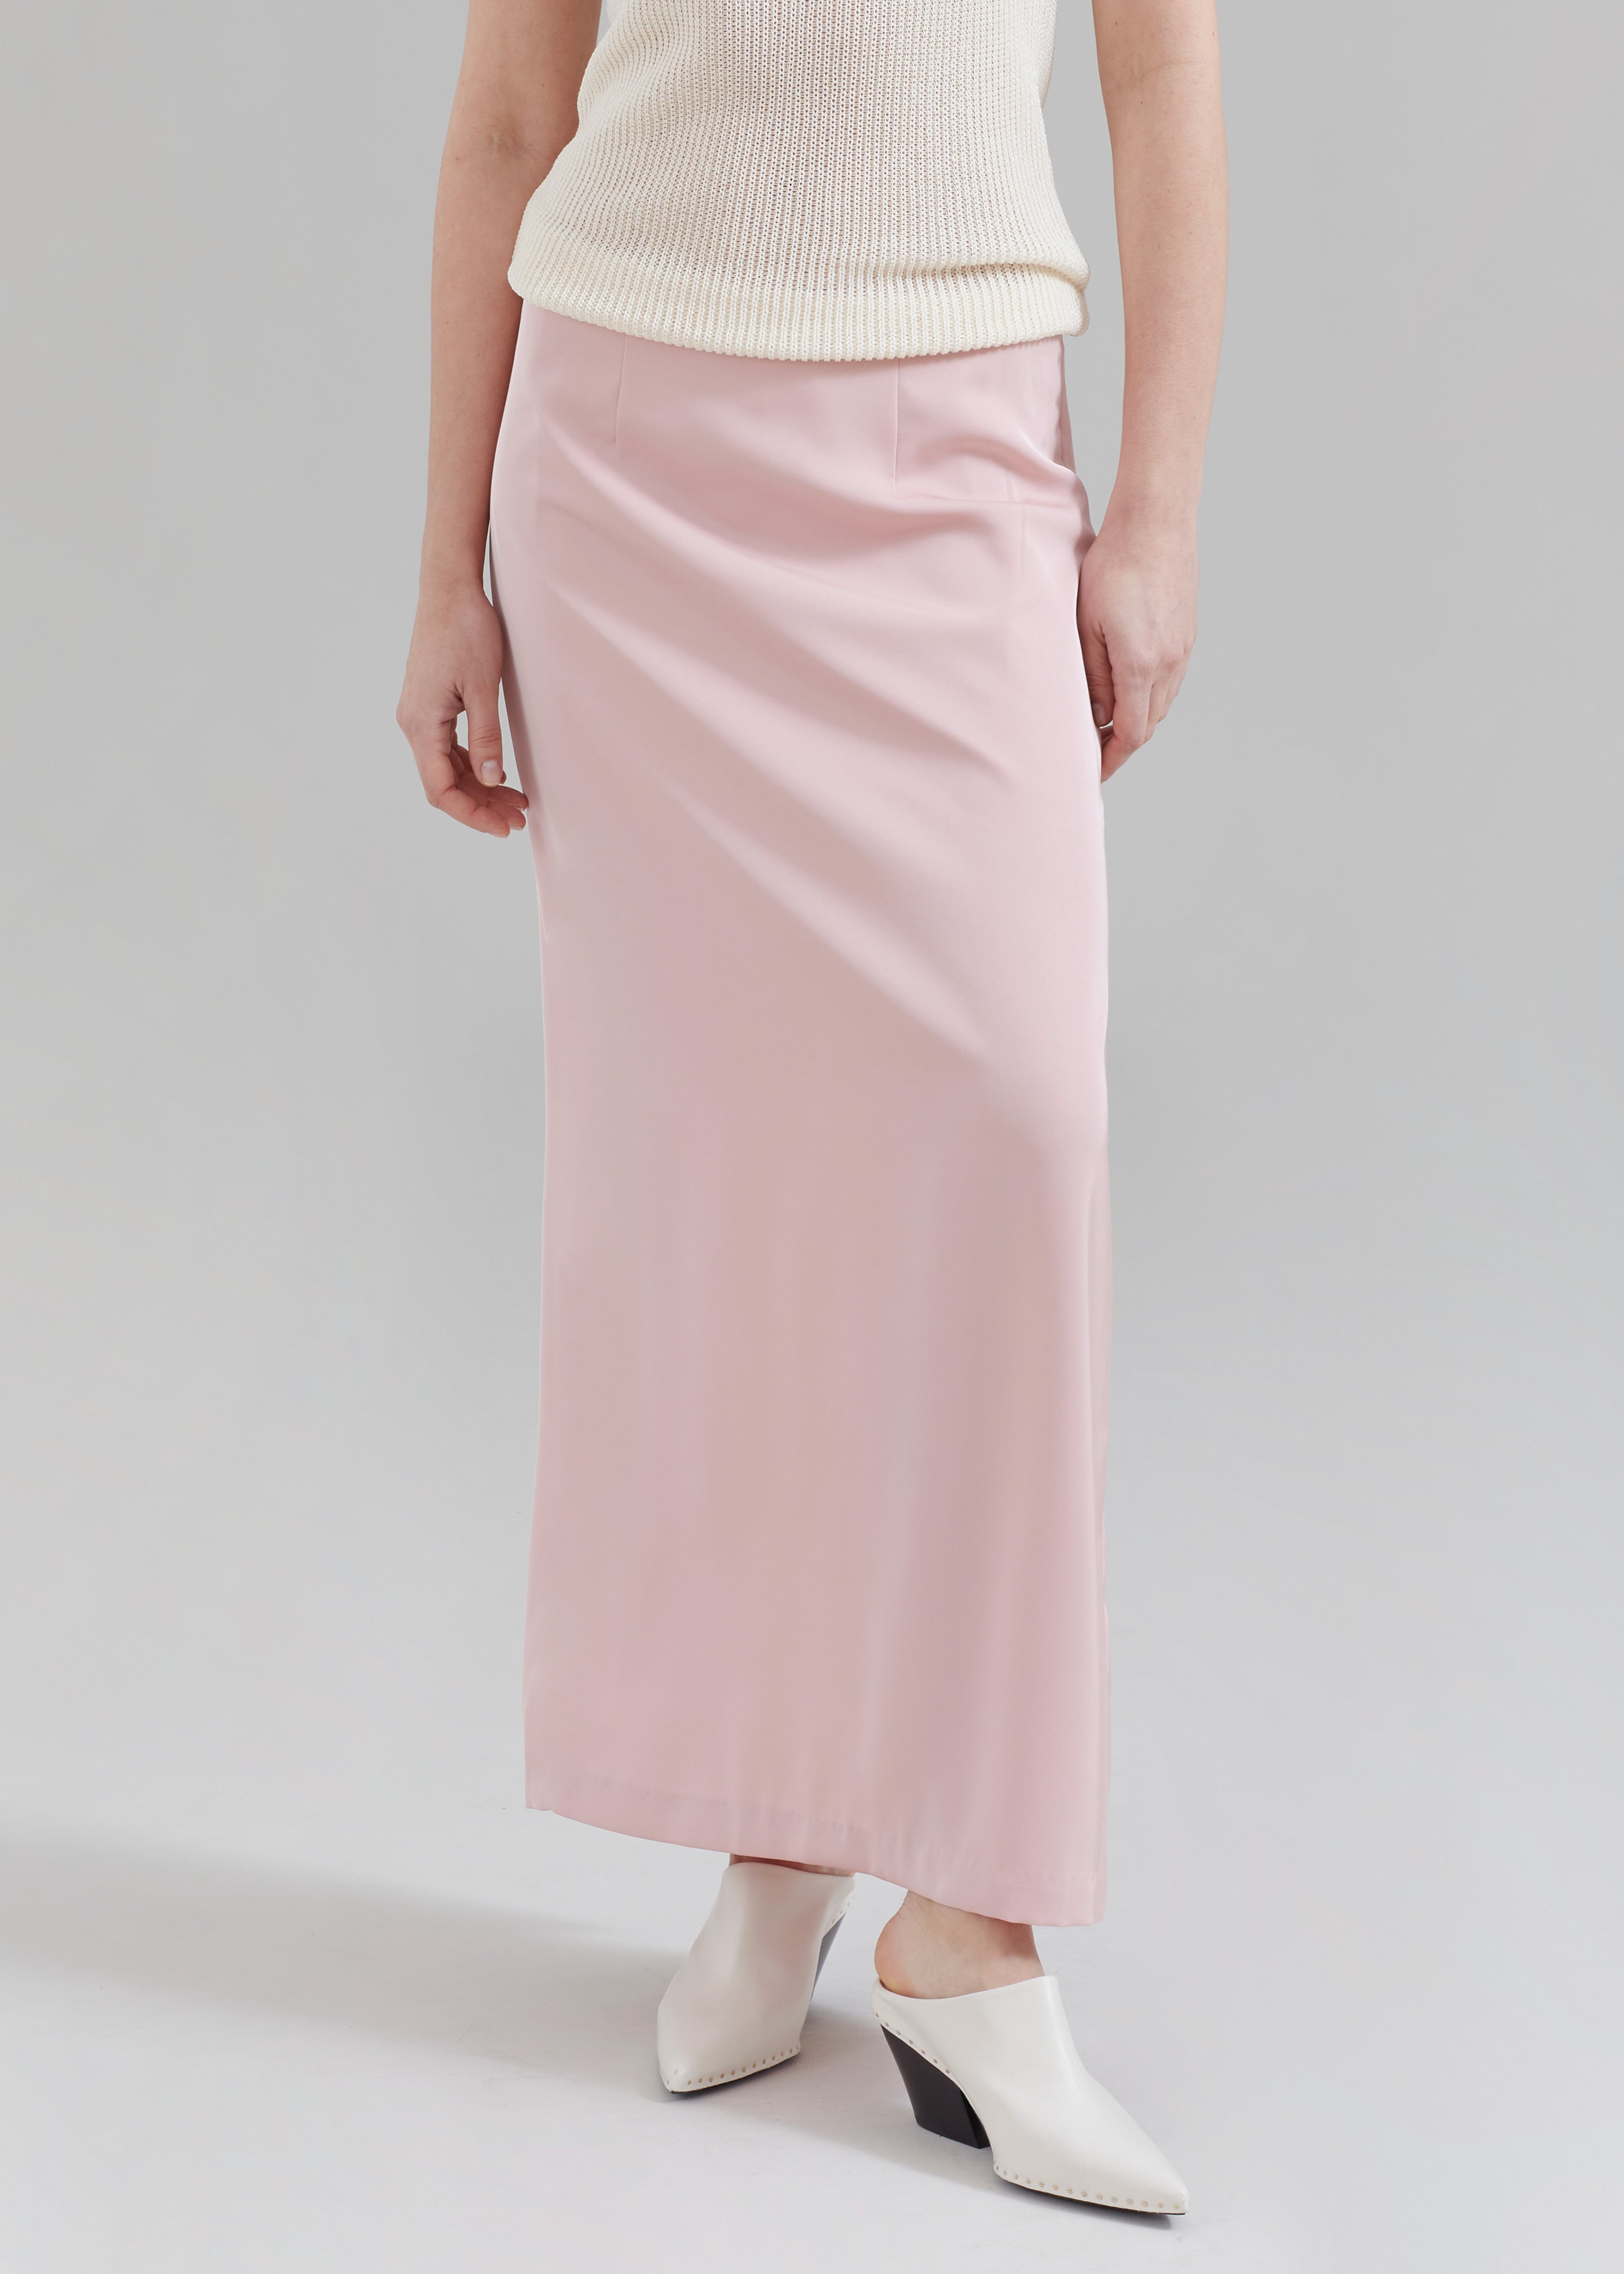 Demi Pencil Skirt - Pink - 5